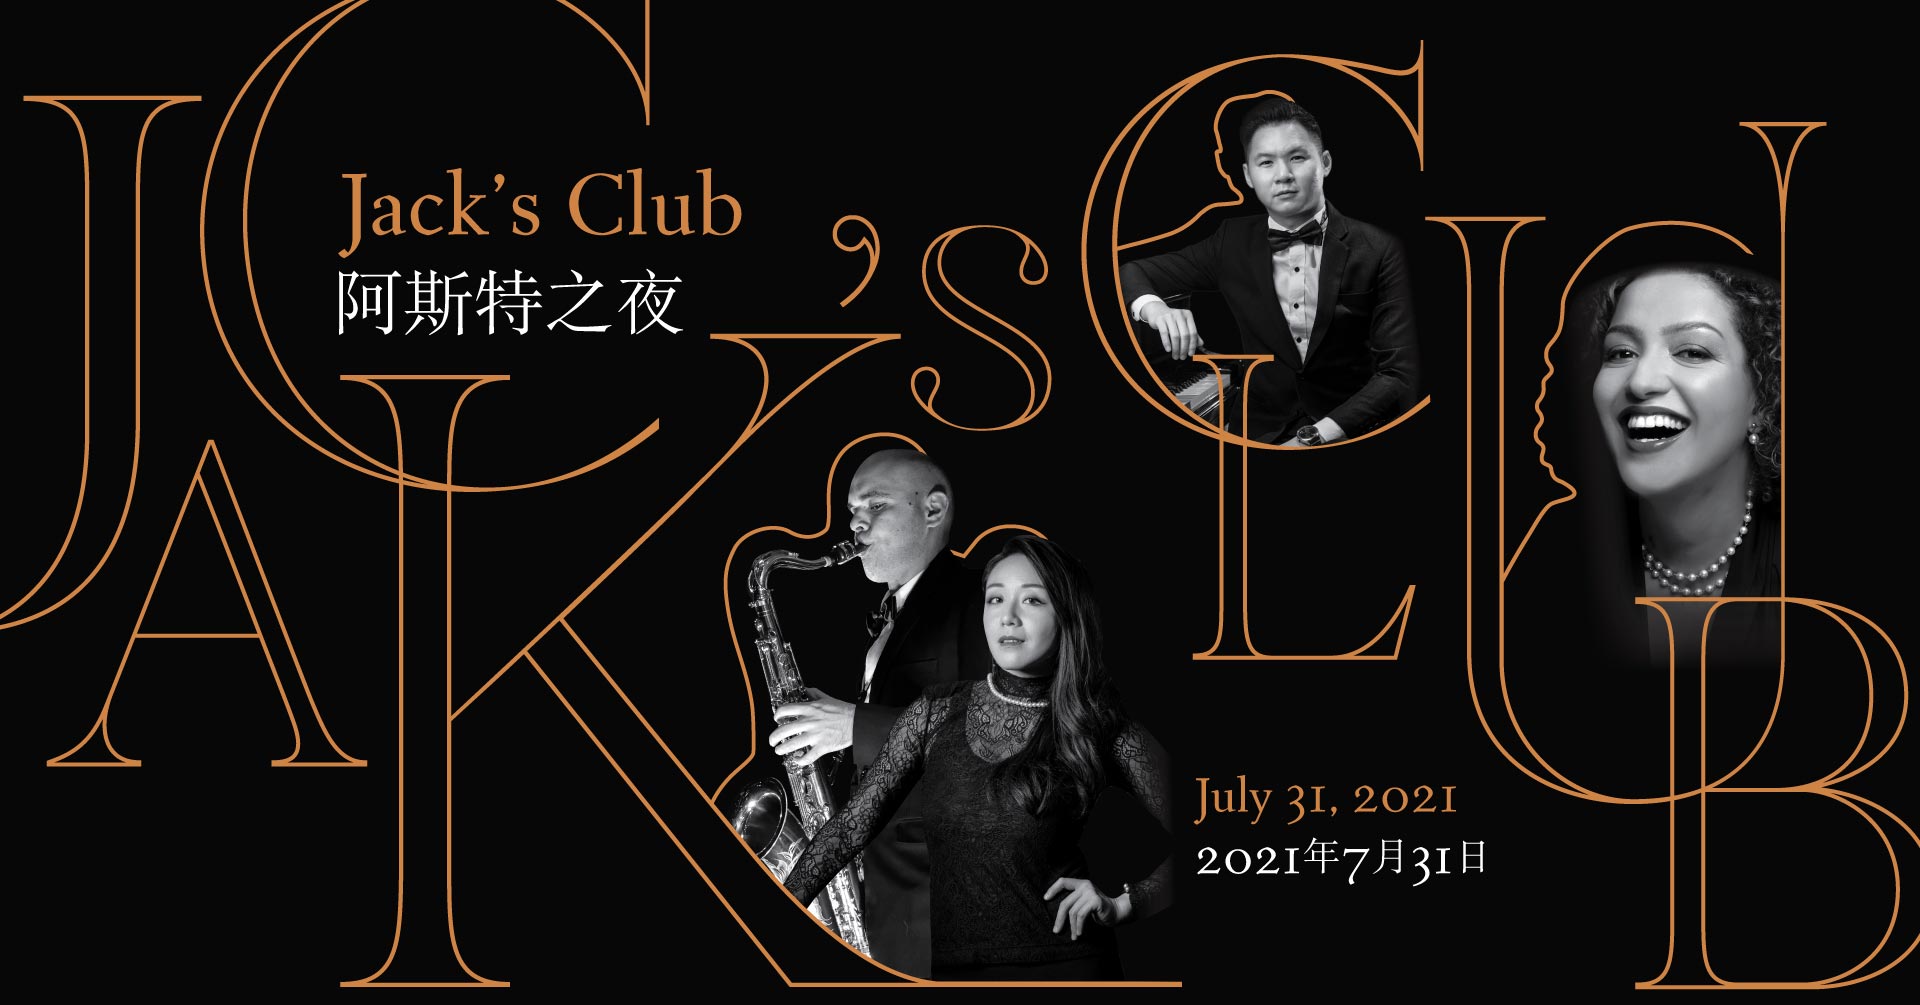 Jacks Club at St Regis Macao July 2021 poster